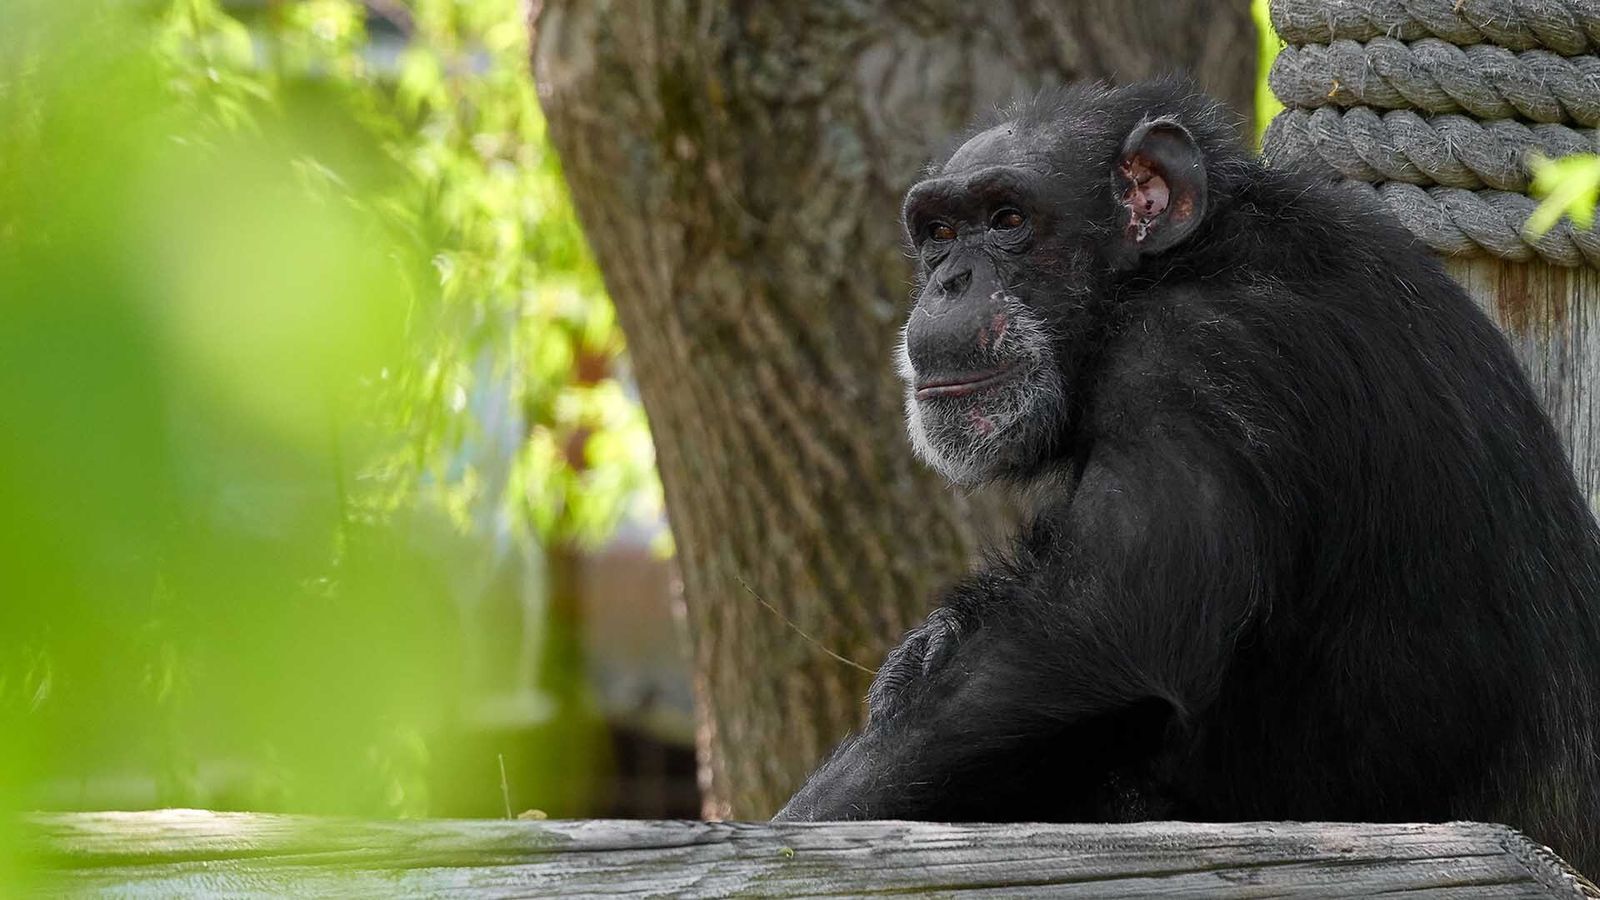 Fauna Foundation chimpanzee resident, Tatu